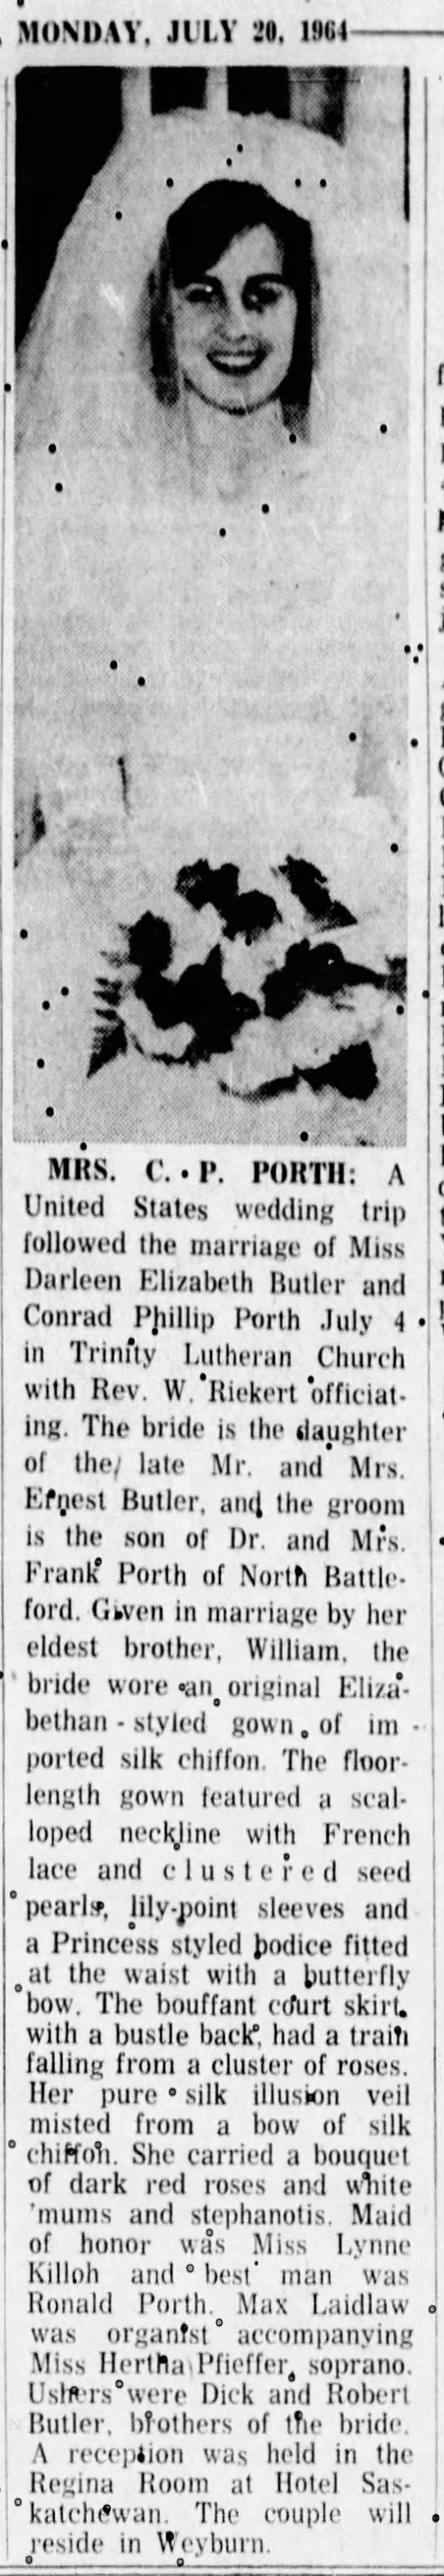 Wedding: Porth-Butler - 